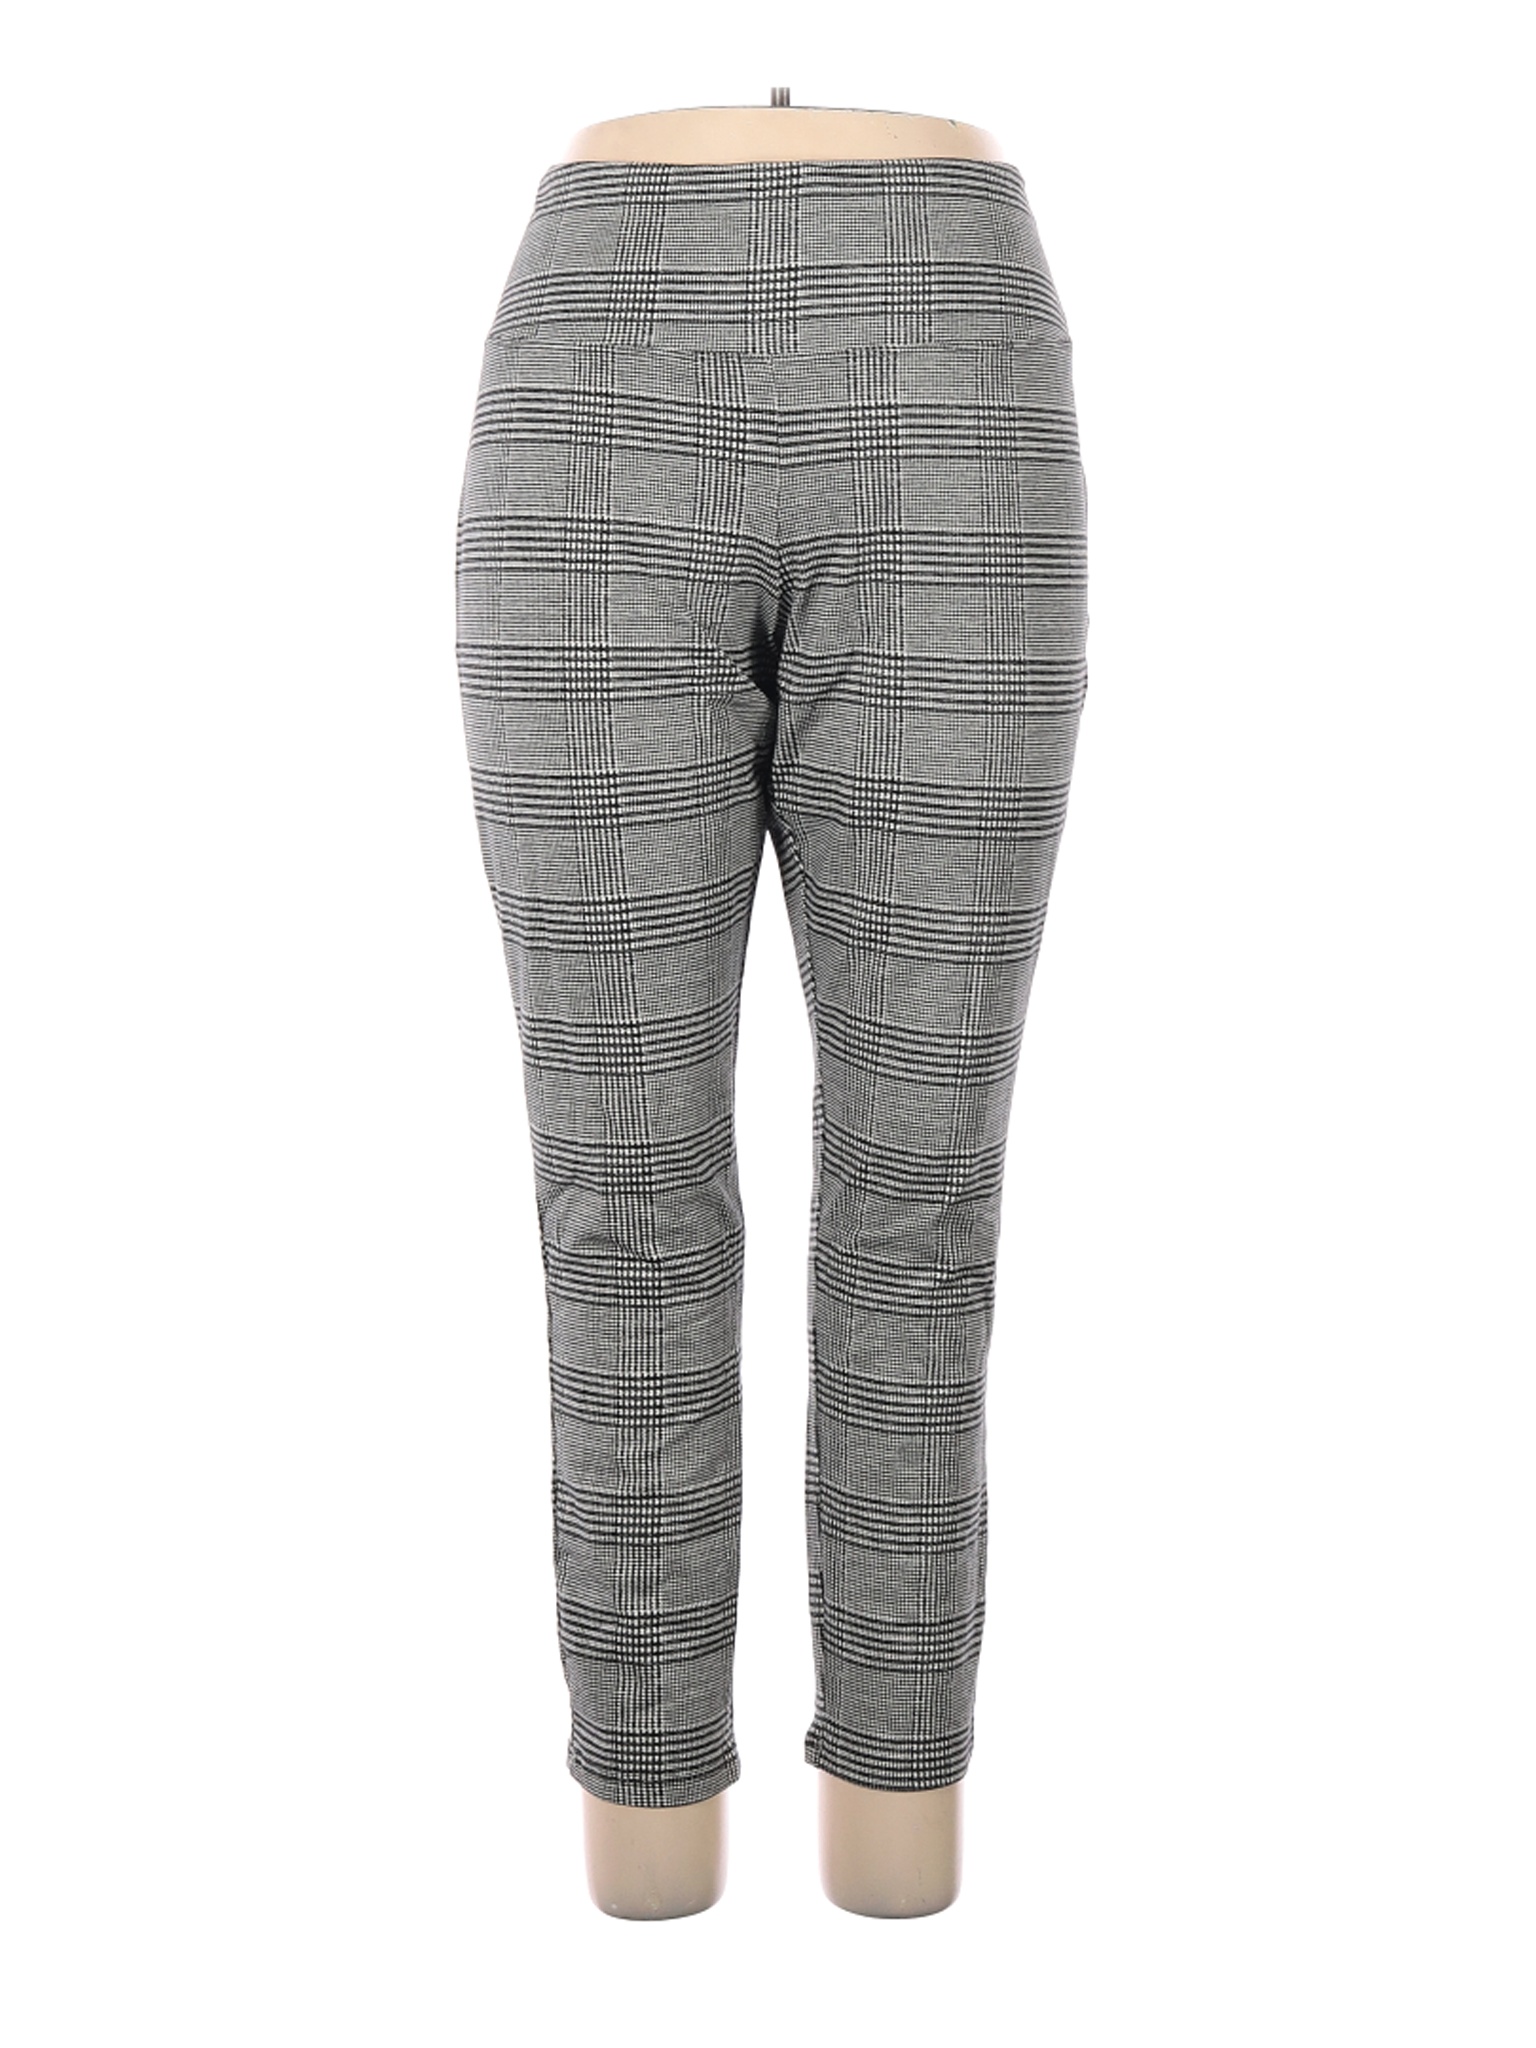 Natural Reflections Women Gray Casual Pants XXL | eBay